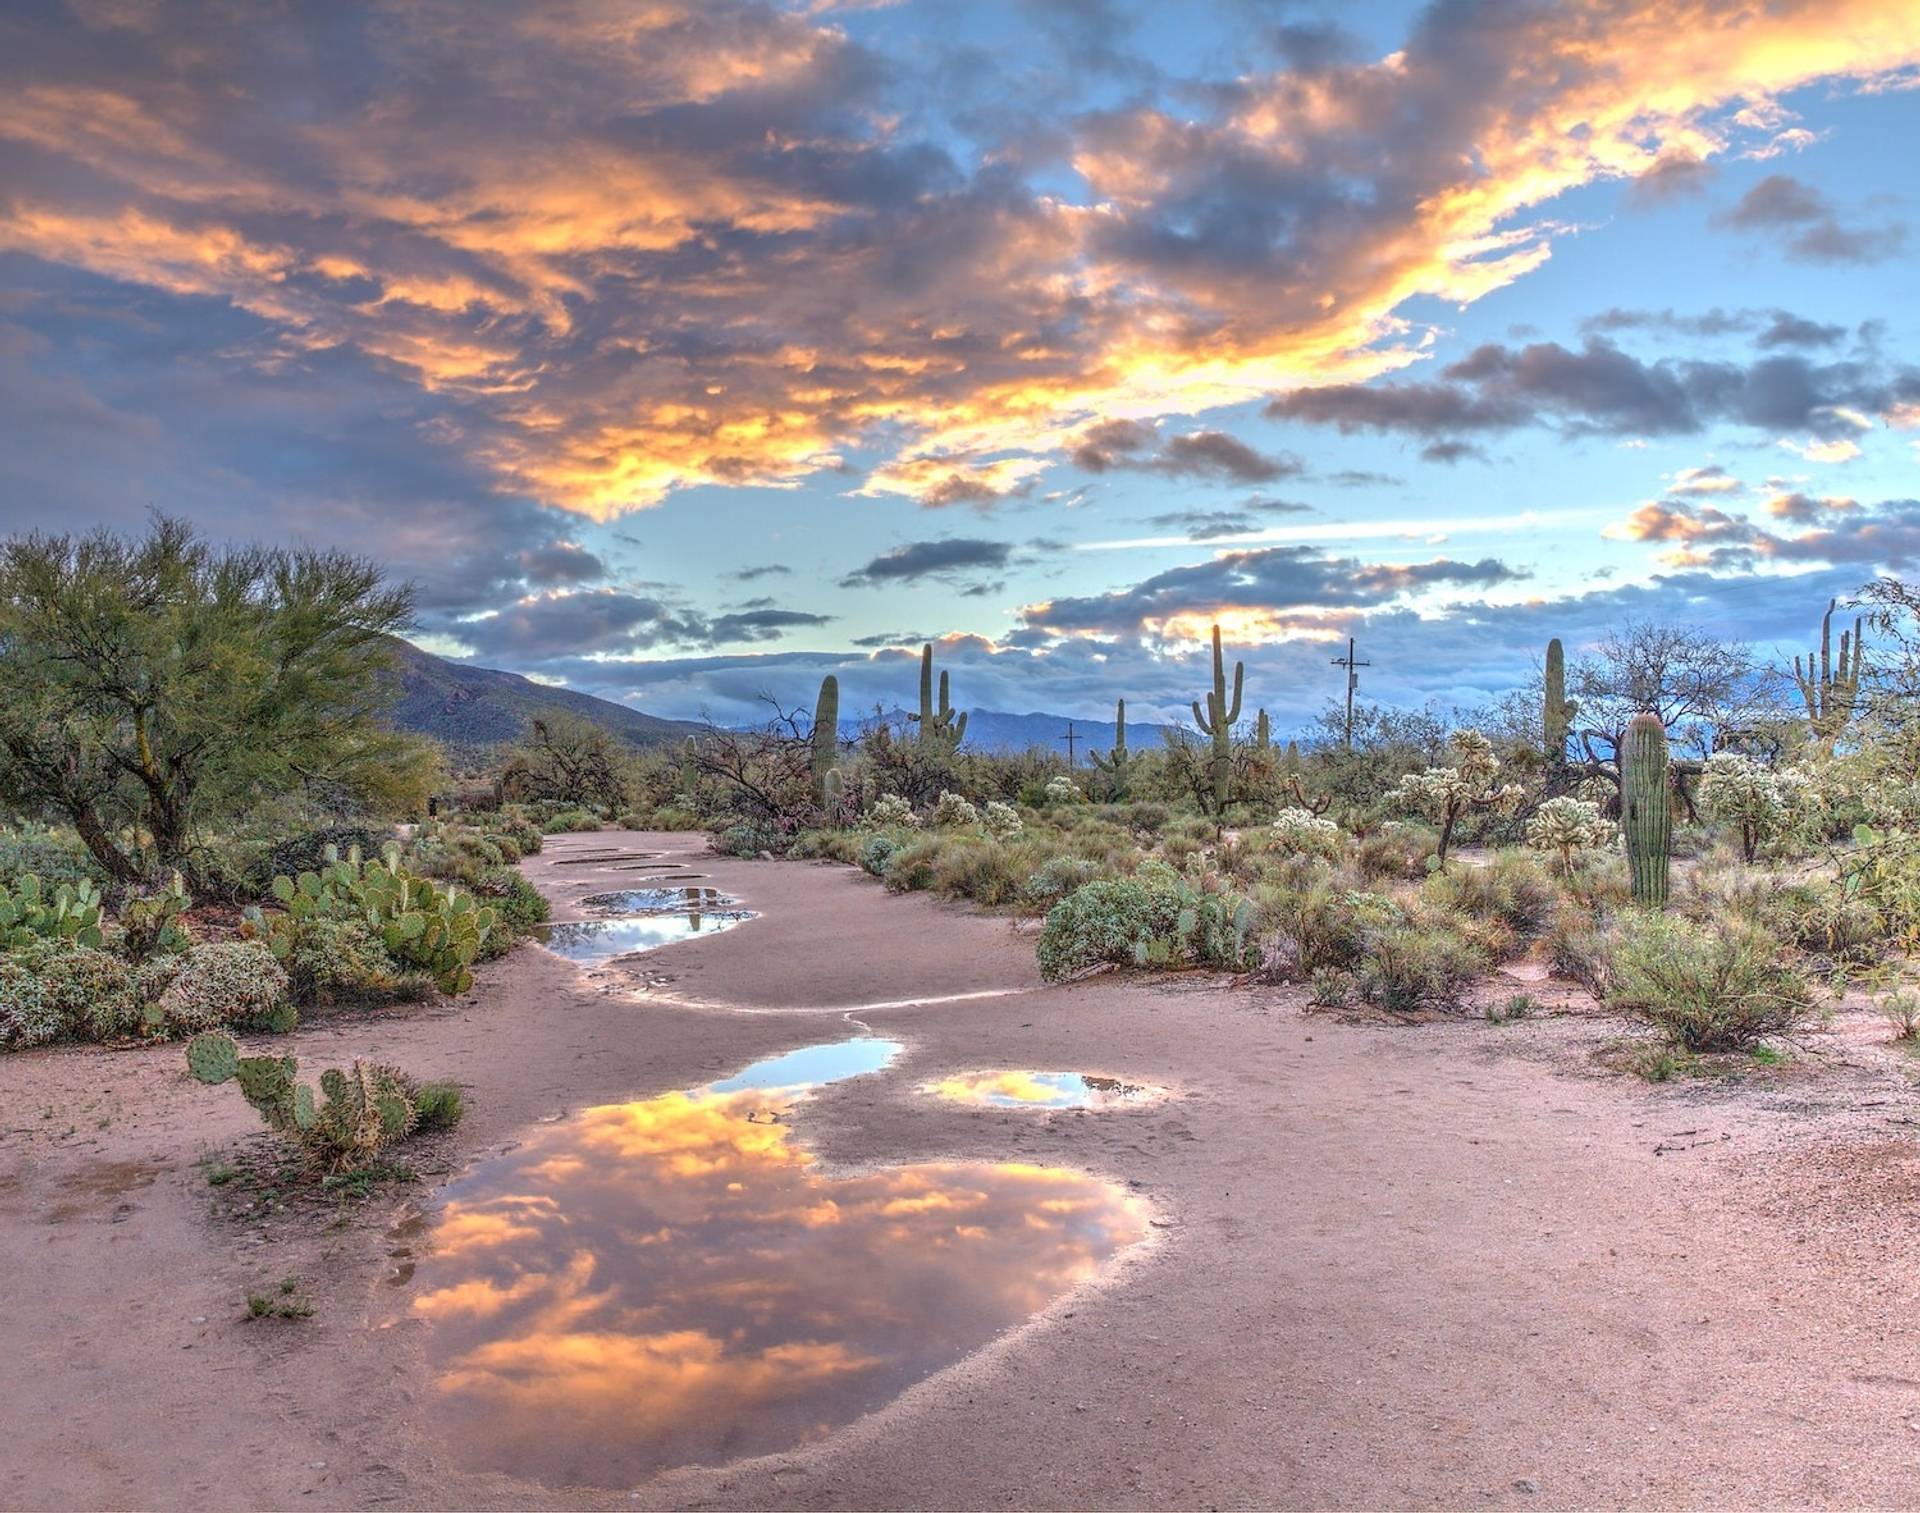 Saguaro cacti and beautiful colorful desert skyline to represent where to buy e-bikes in Arizona